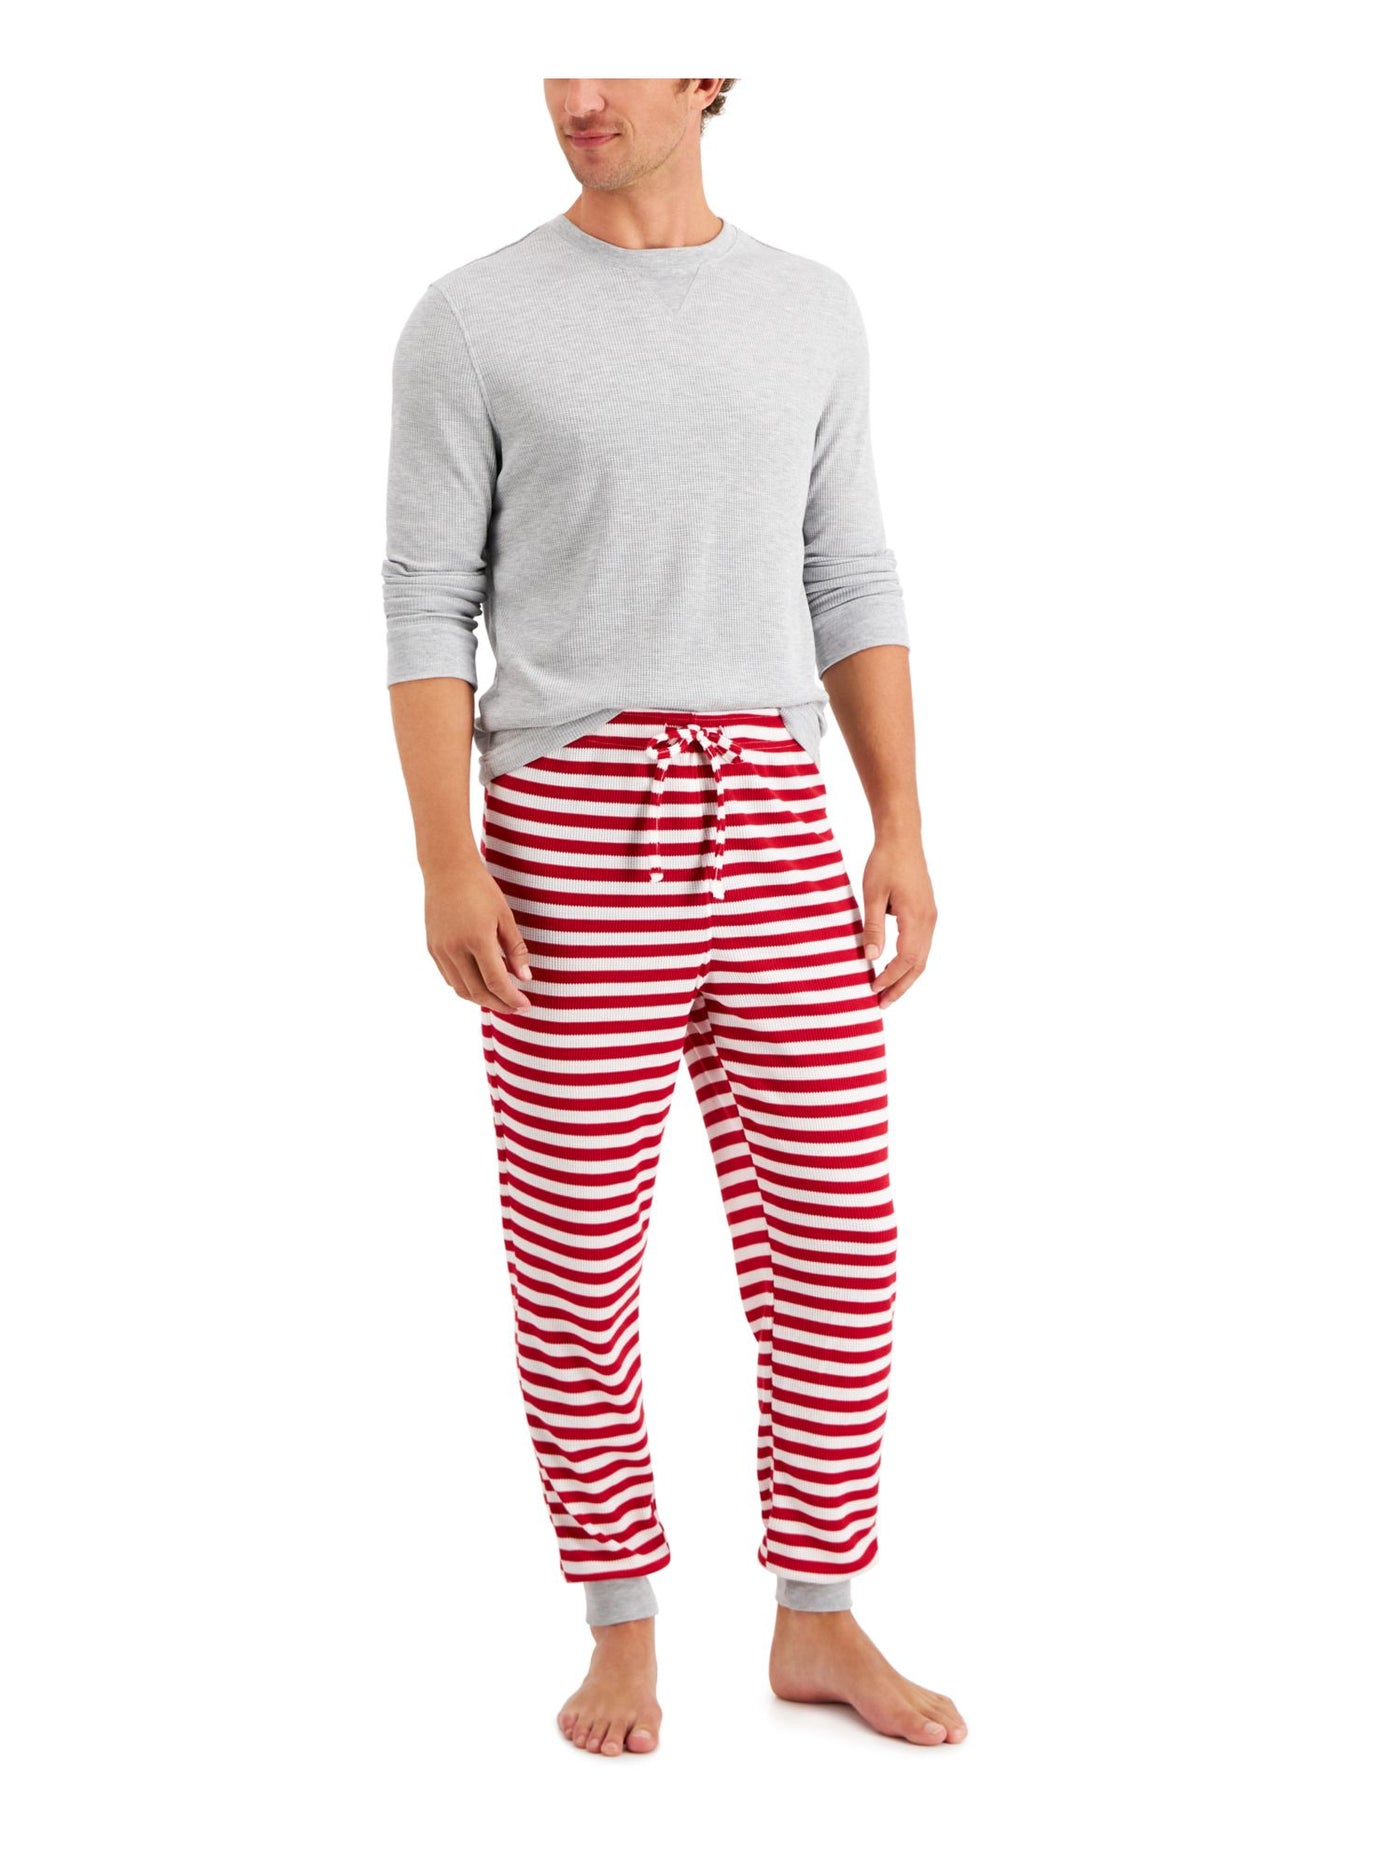 FAMILY PJs Mens Red Top Elastic Band Long Sleeve Lounge Pants Thermal Pajamas XL